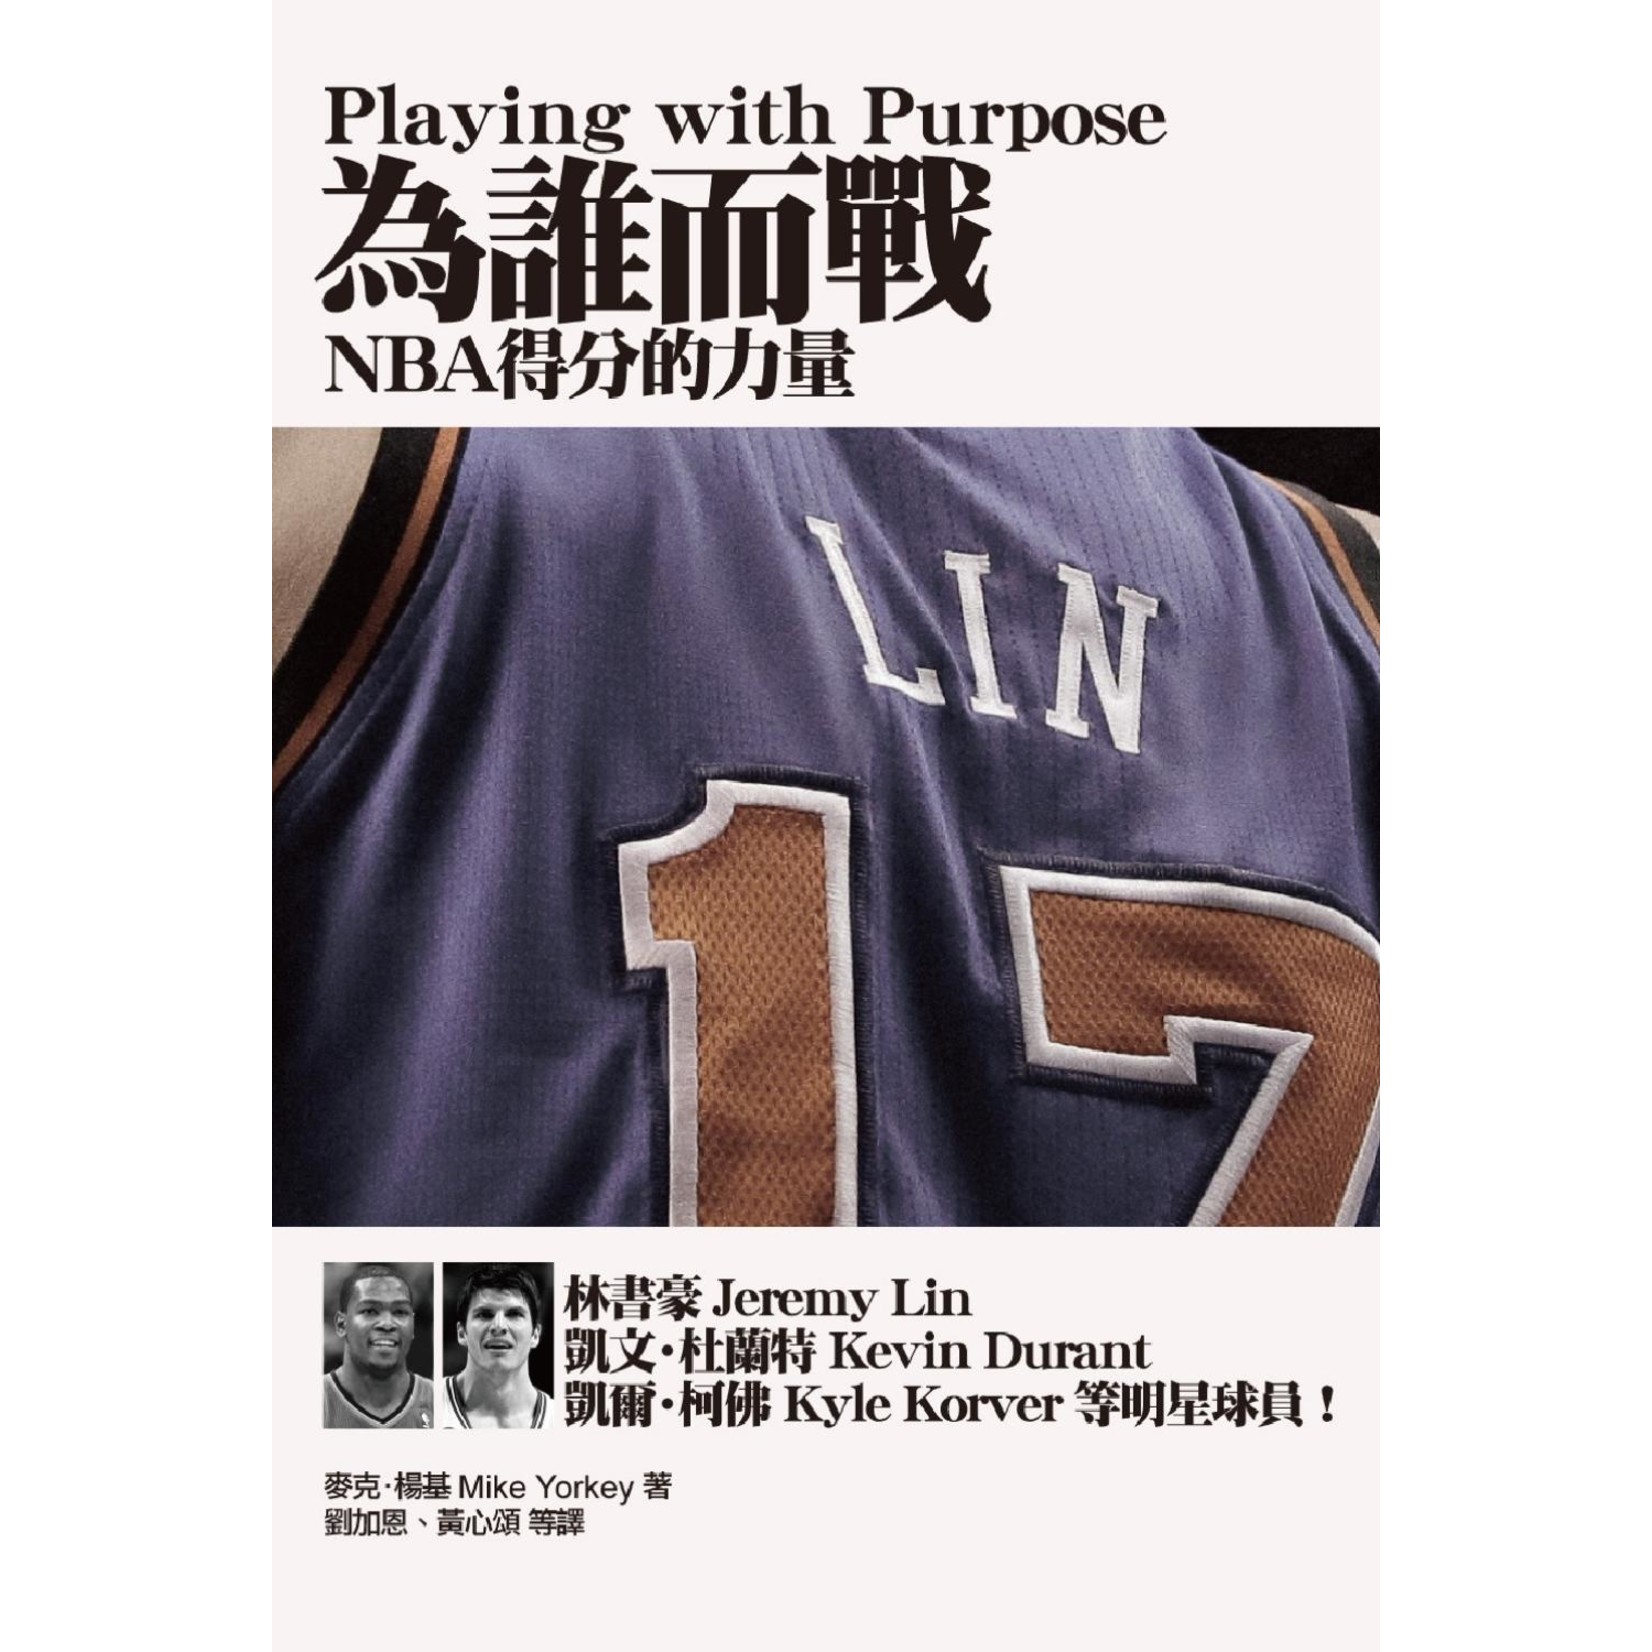 道聲 Taosheng Taiwan 為誰而戰：NBA得分的力量  Playing with Purpose